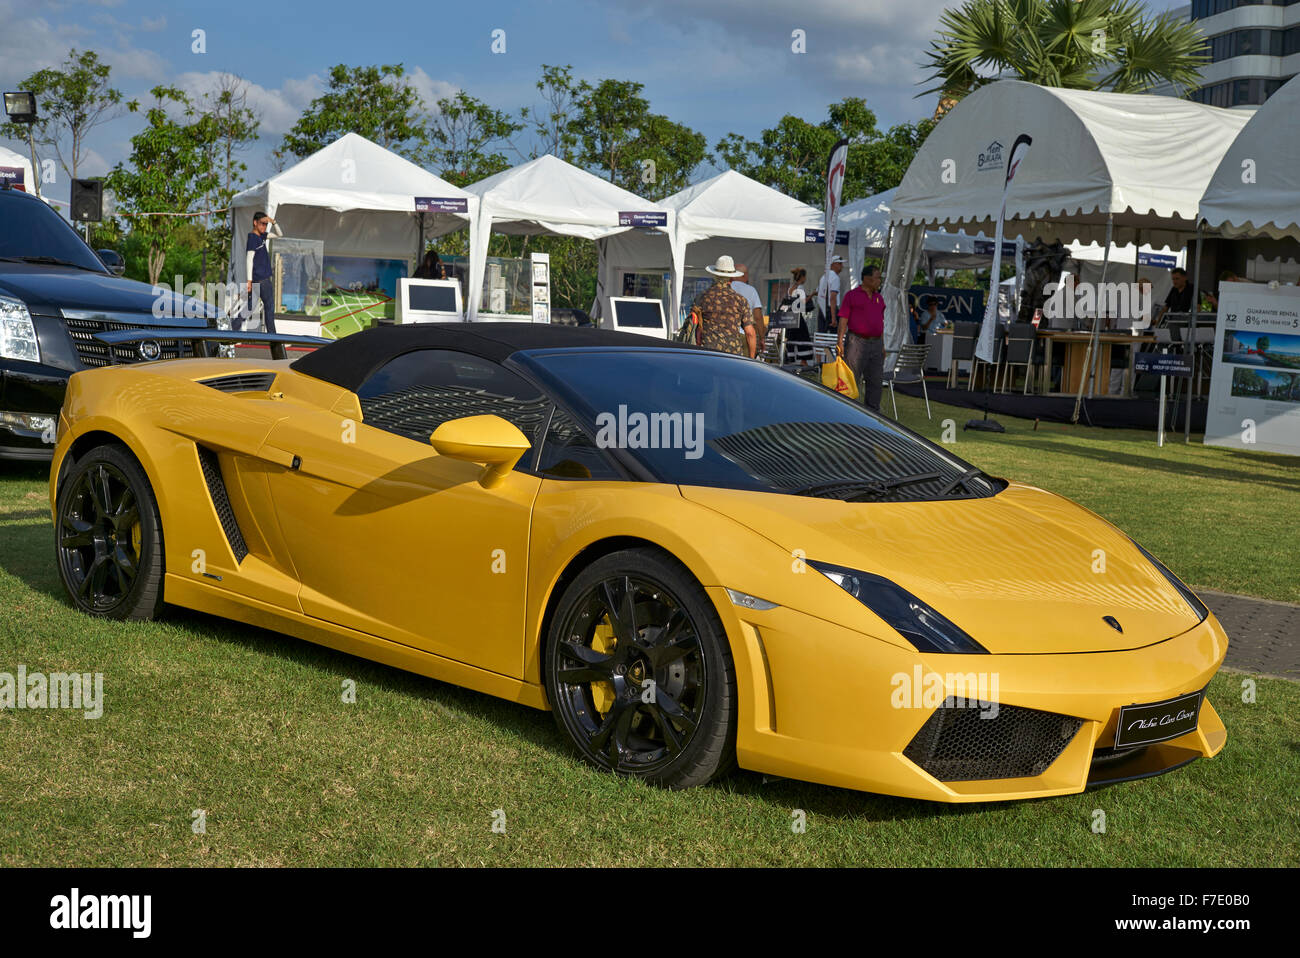 Yellow Lamborghini Gallardo Stock Photos & Yellow ...